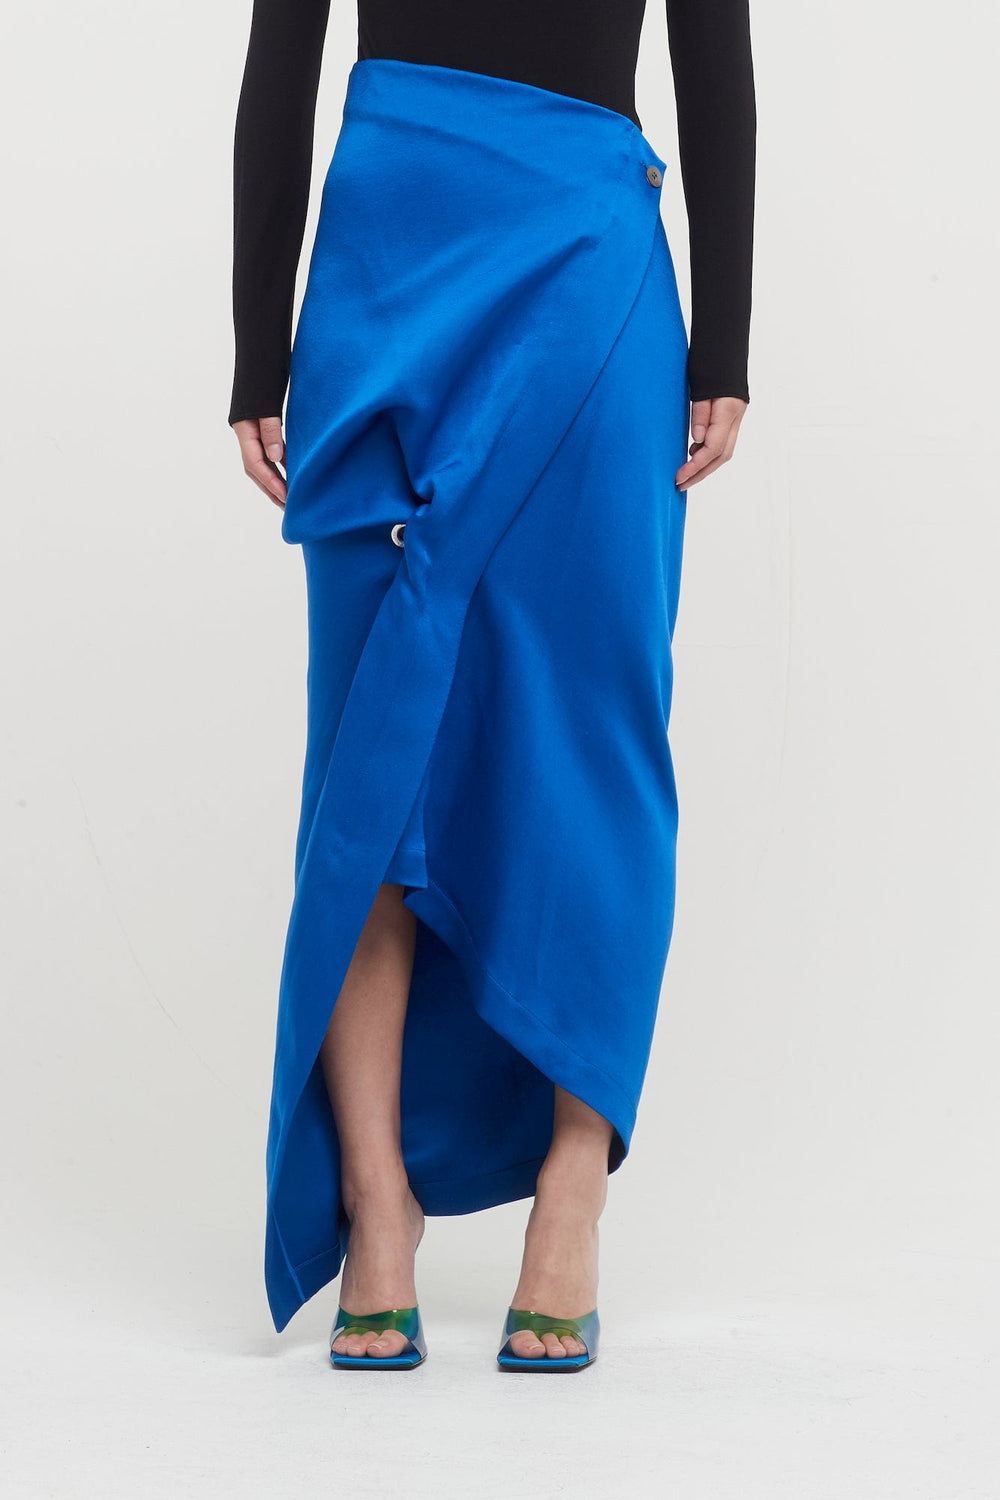 Issey Miyake Enveloping Skirt in Blue – Antidote Fashion and Lifestyle